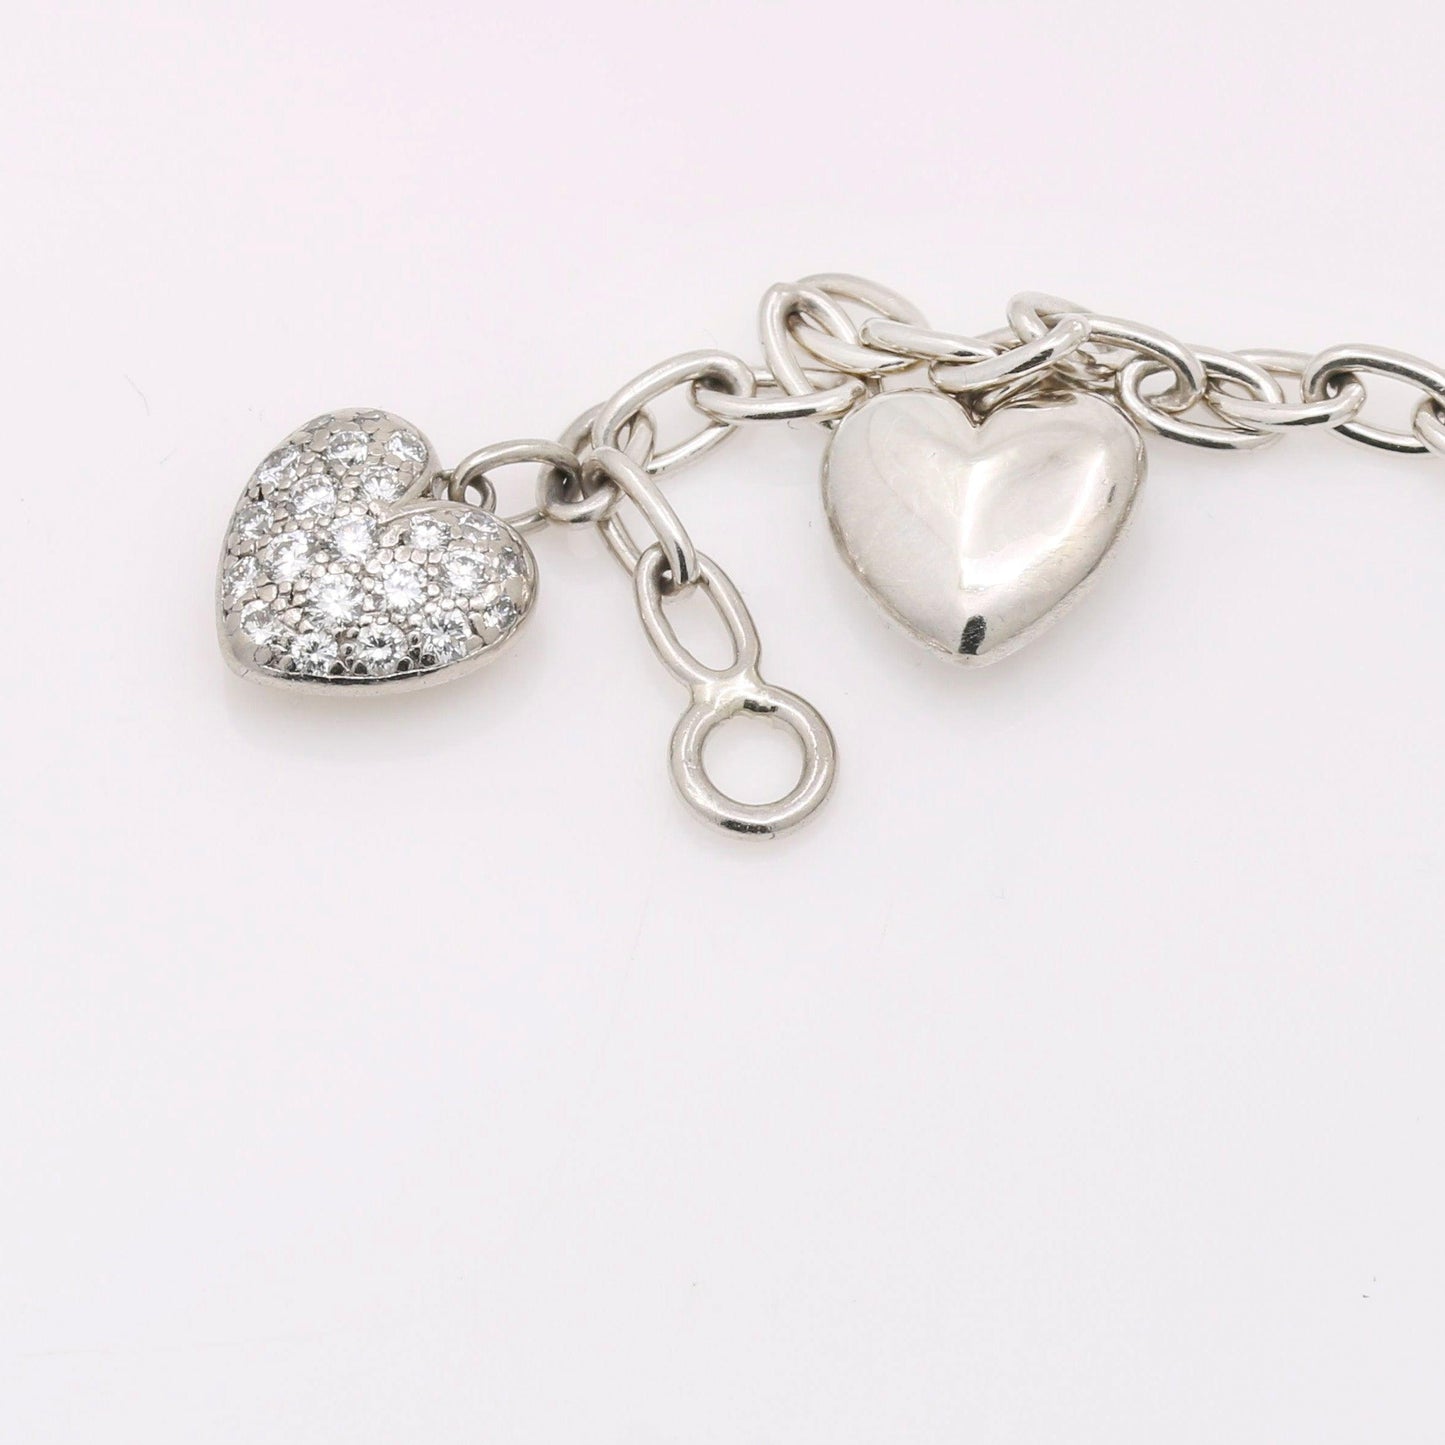 Tiffany & Co. Pave Diamond Hearts Charm Bracelet in Platinum - 31 Jewels Inc.